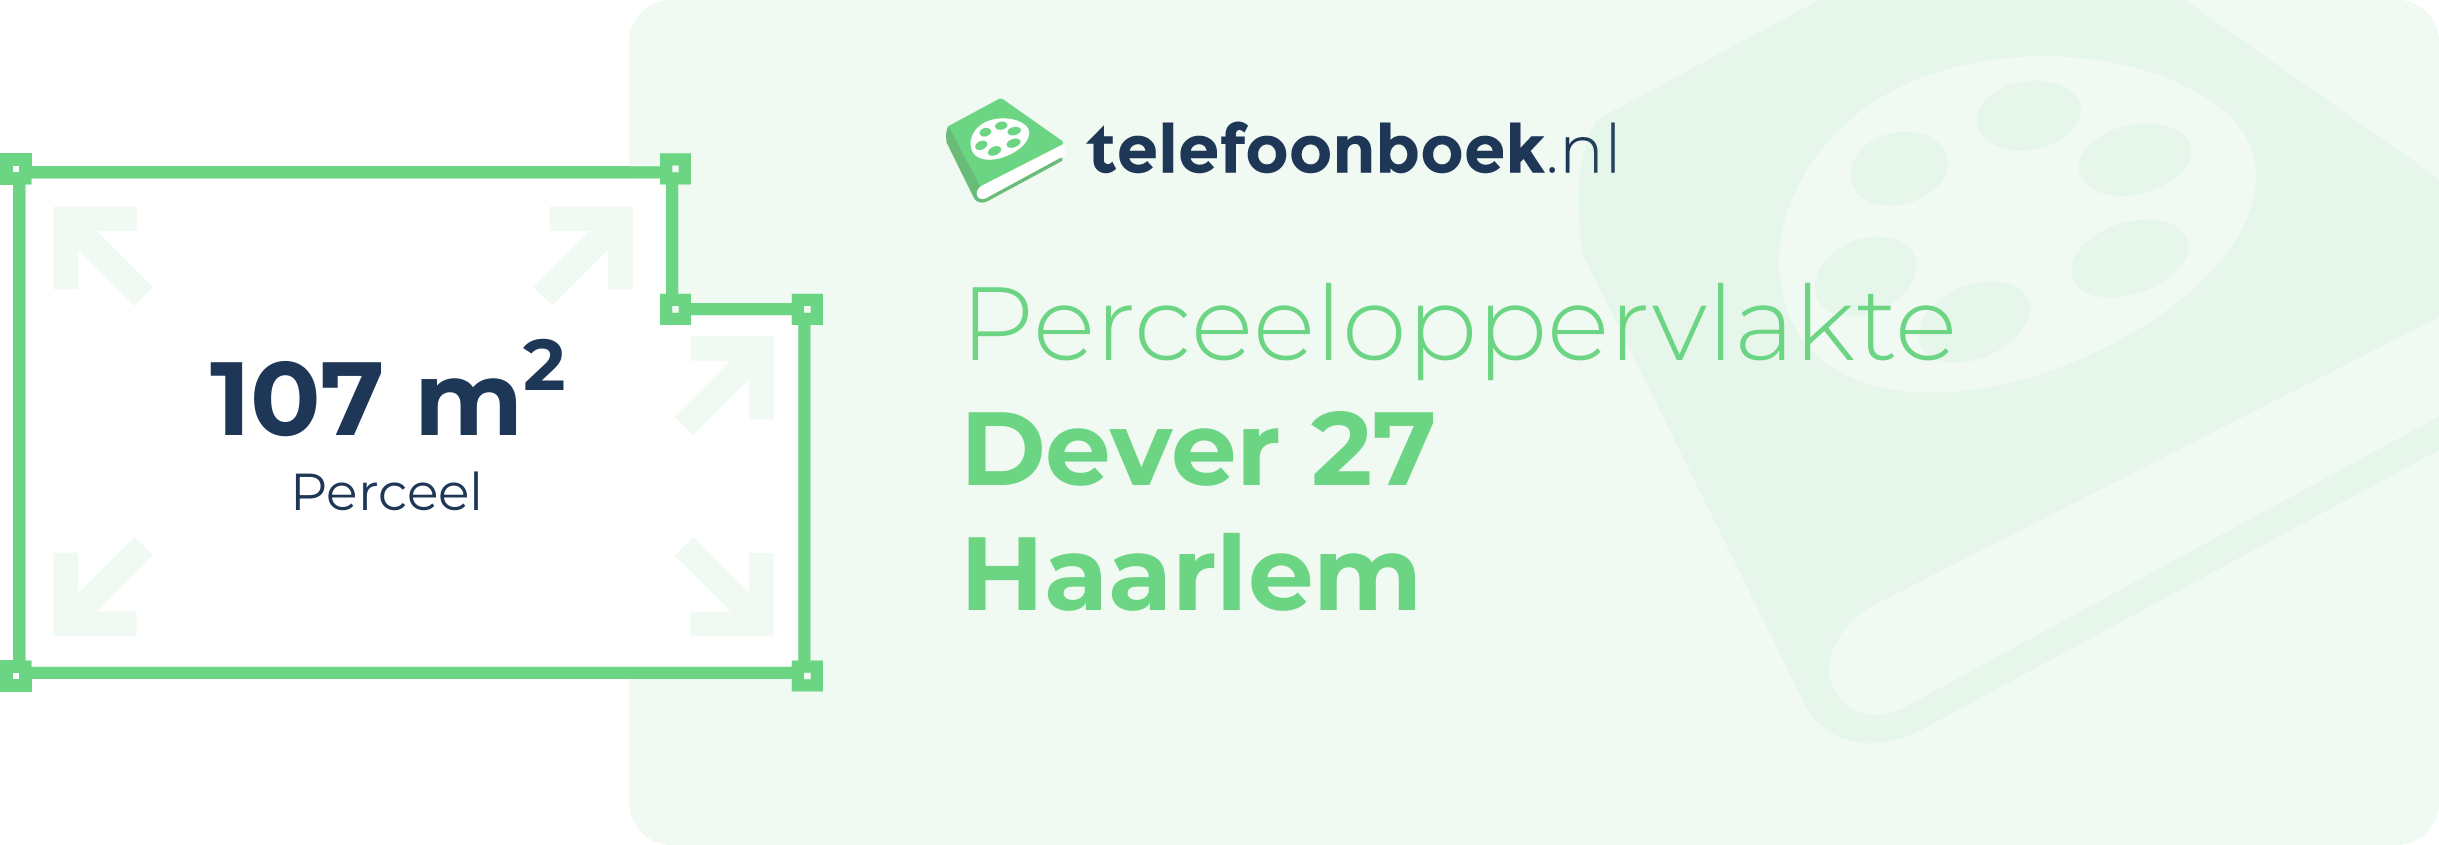 Perceeloppervlakte Dever 27 Haarlem